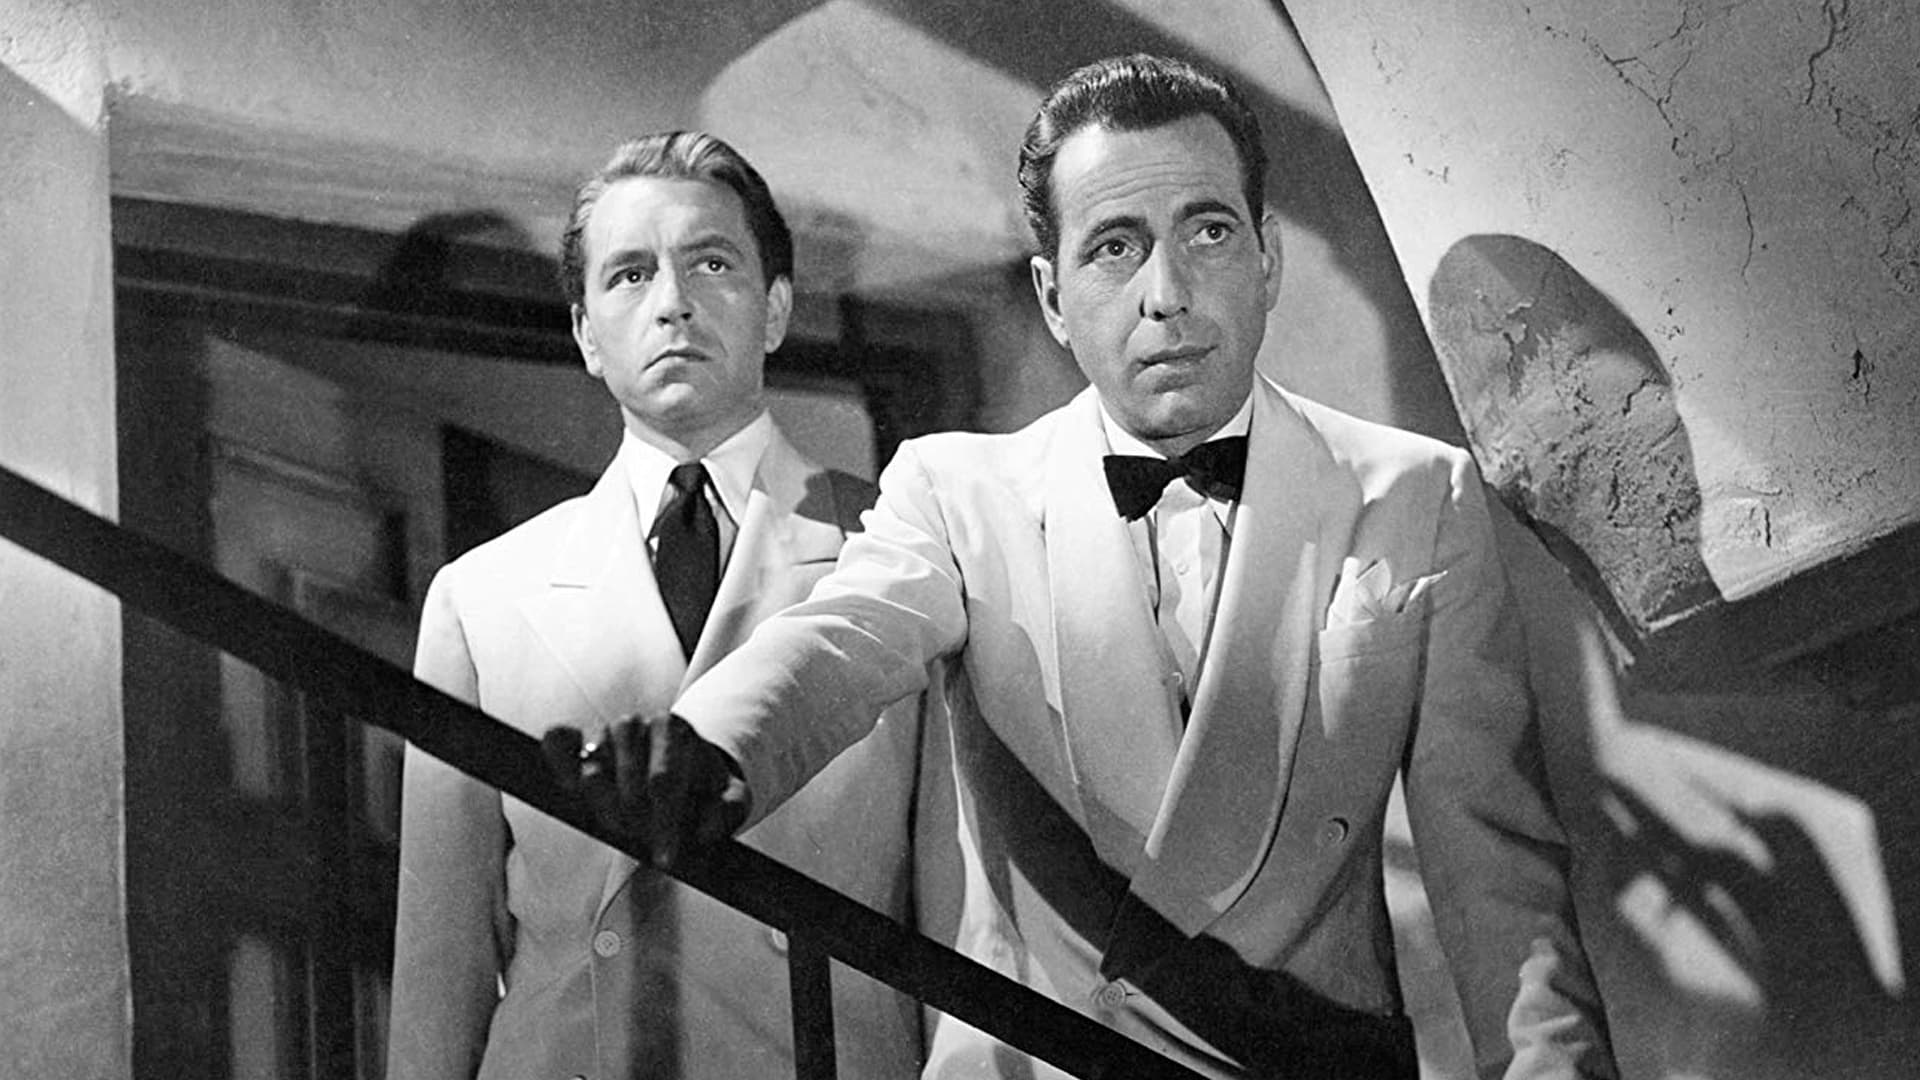 Humphrey Bogart in CASABLANCA